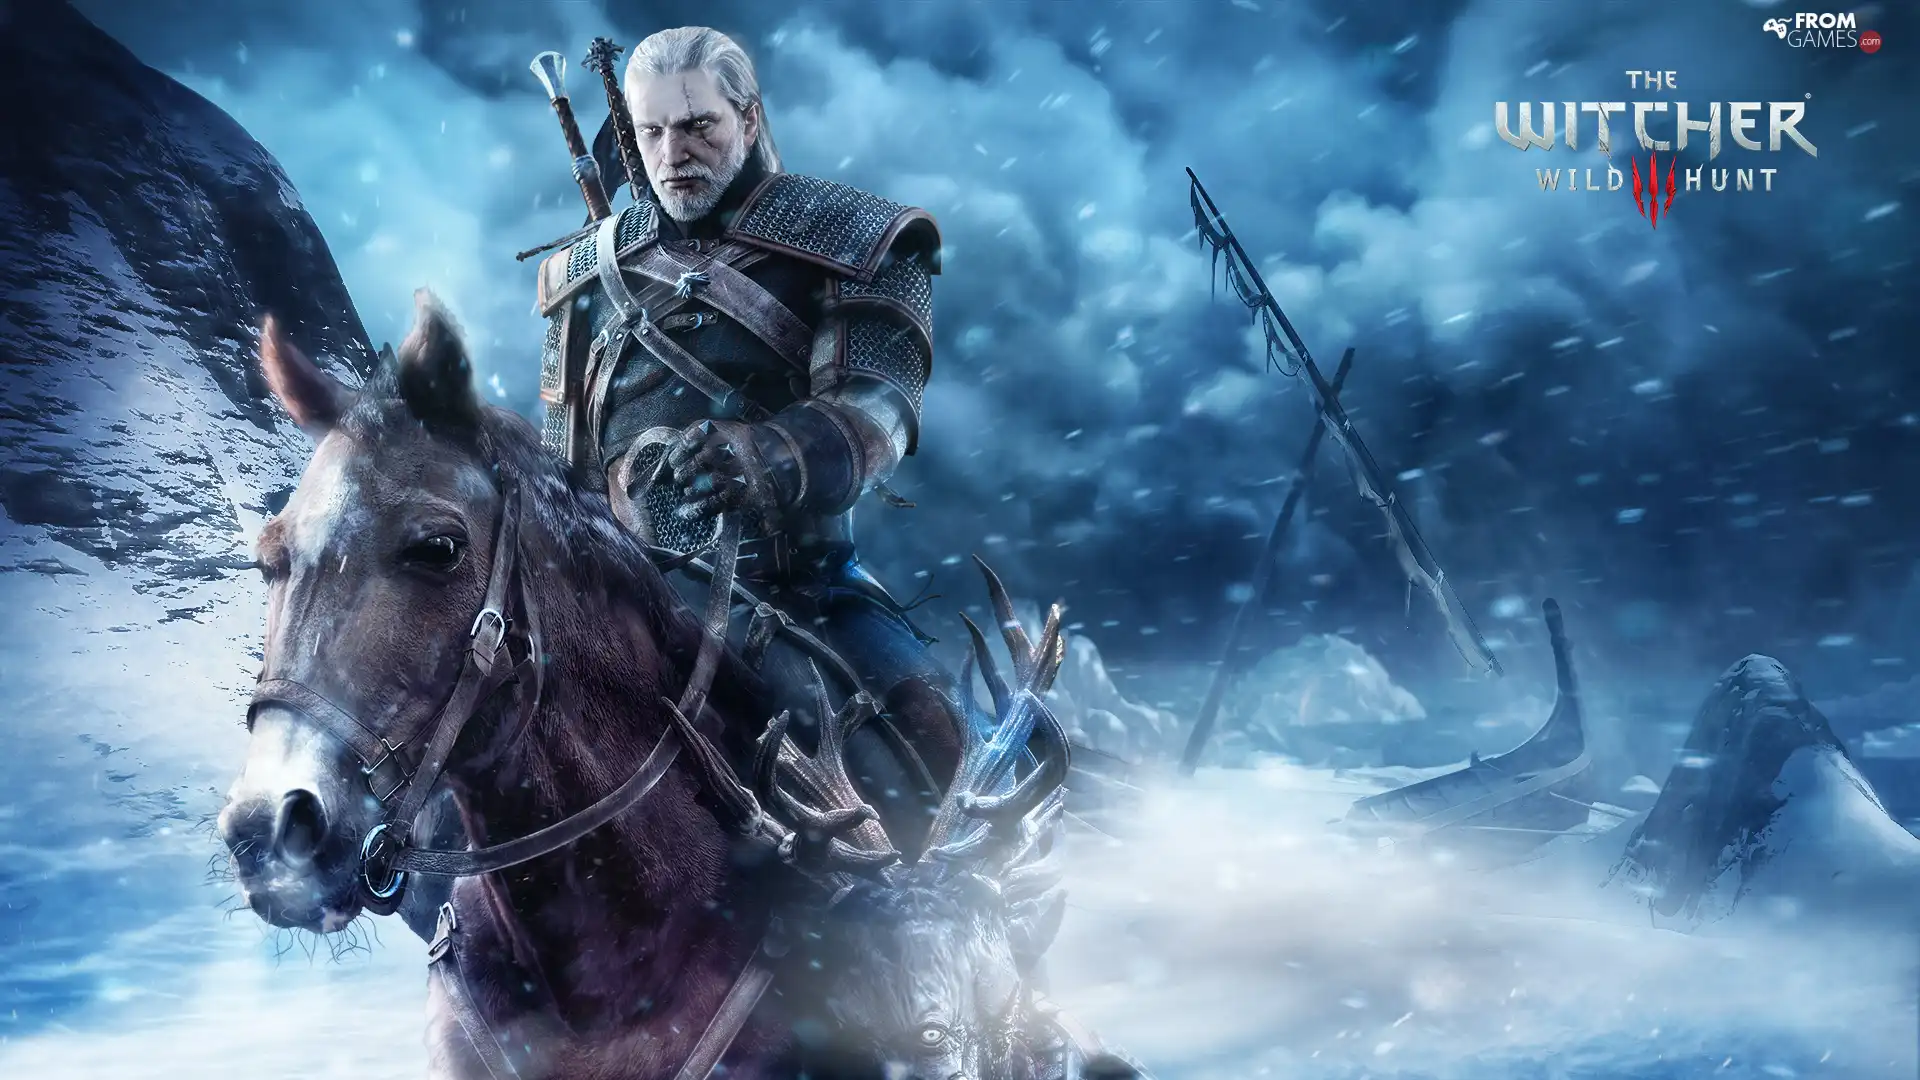 Geralt, Horse, The Witcher 3 Wild Hunt, The Witcher 3 Wild Hunt, game